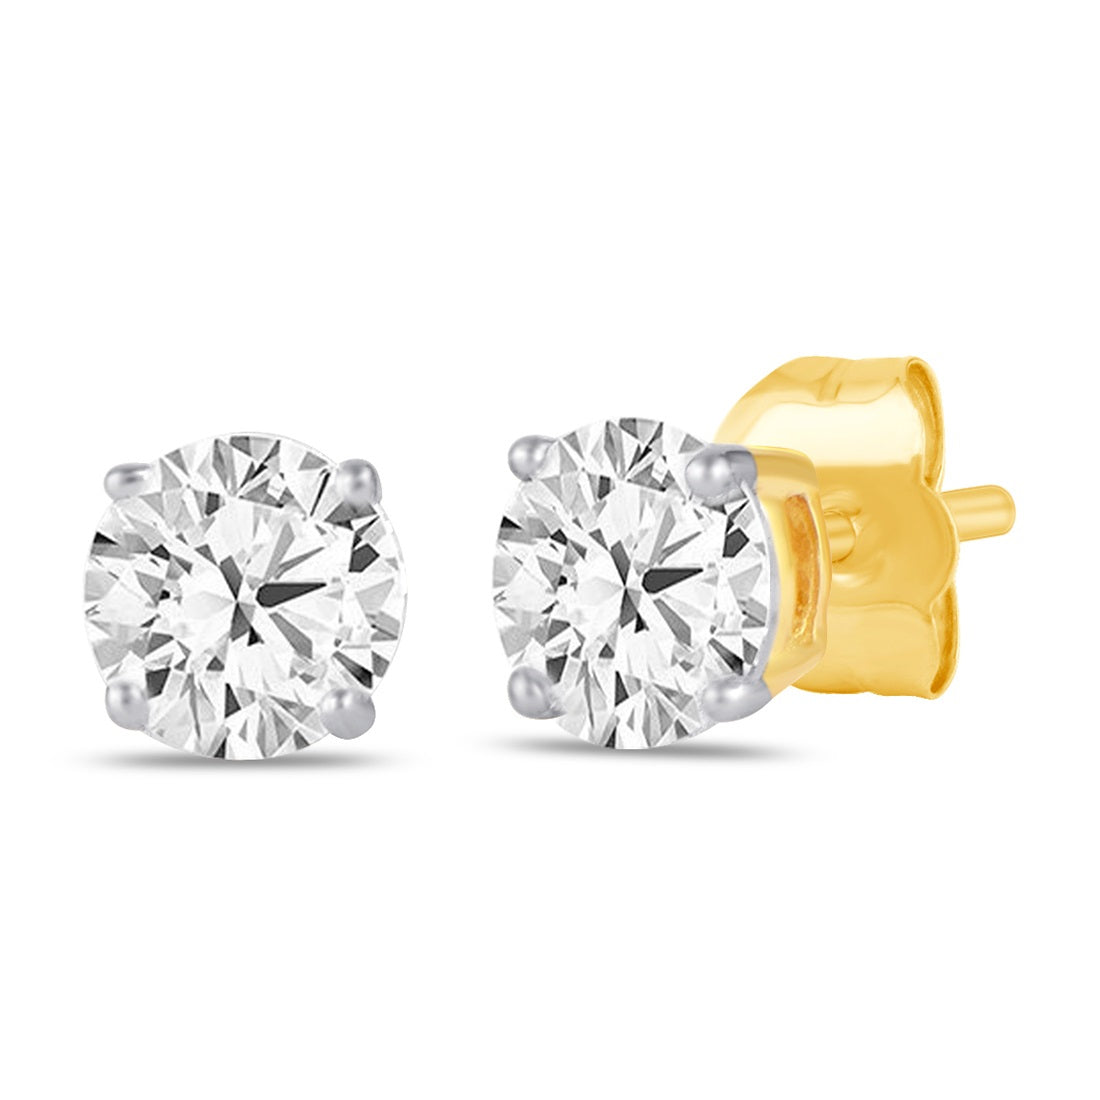 Tia 0.30ct Diamond Stud Earrings in 9ct Yellow Gold Earrings Bevilles 